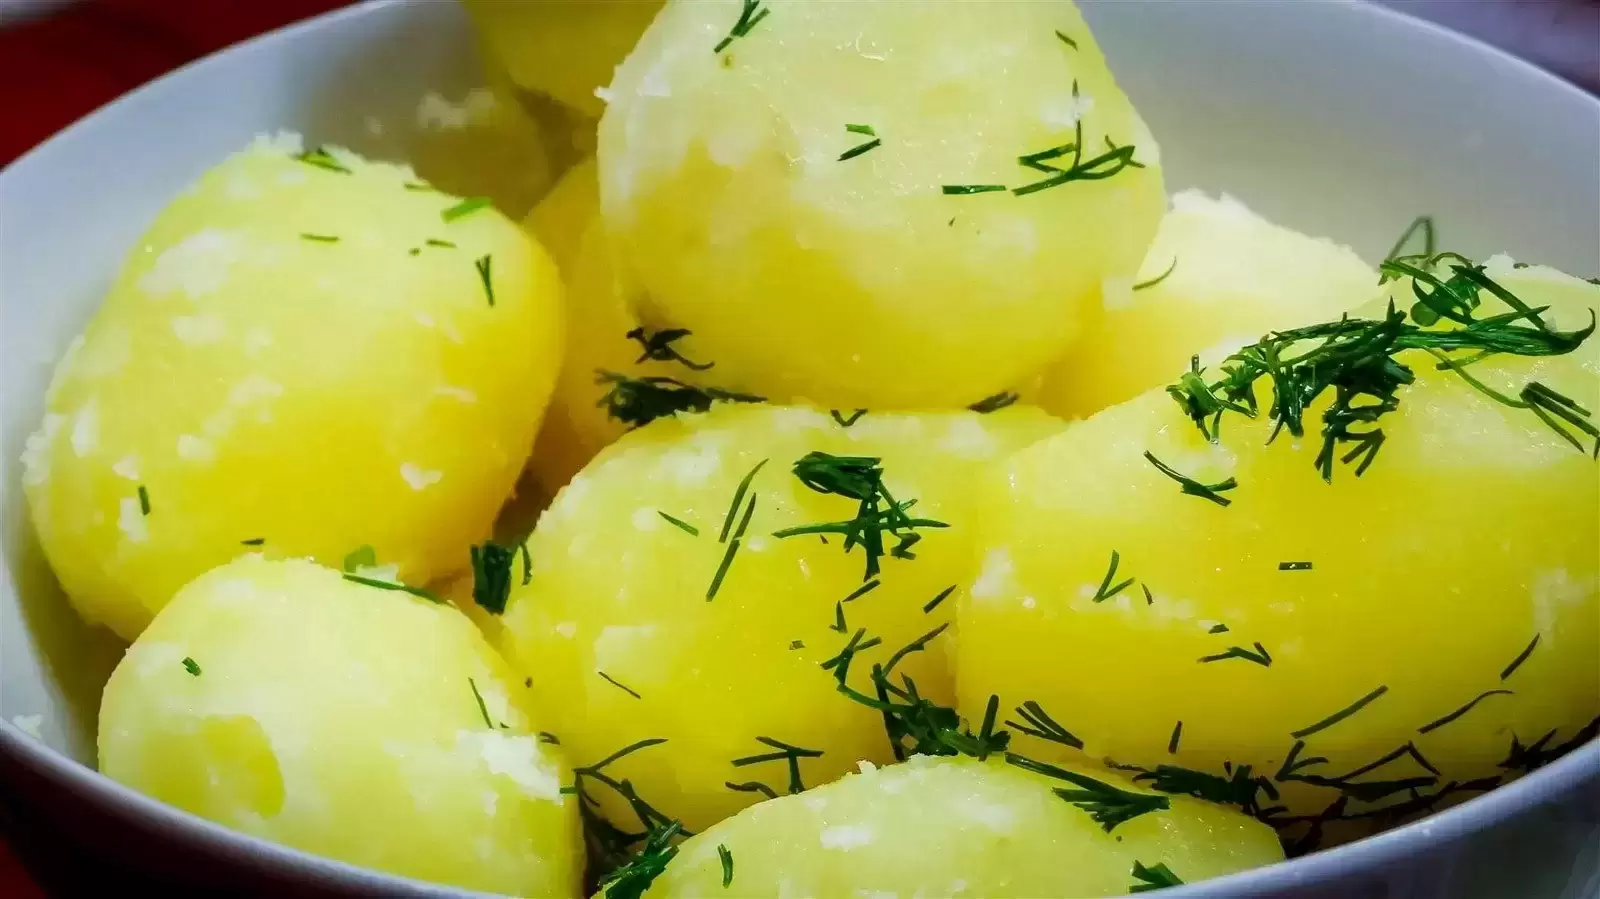 Lietuviškos bulvės: ar išties jau visi patiekalai išragauti?